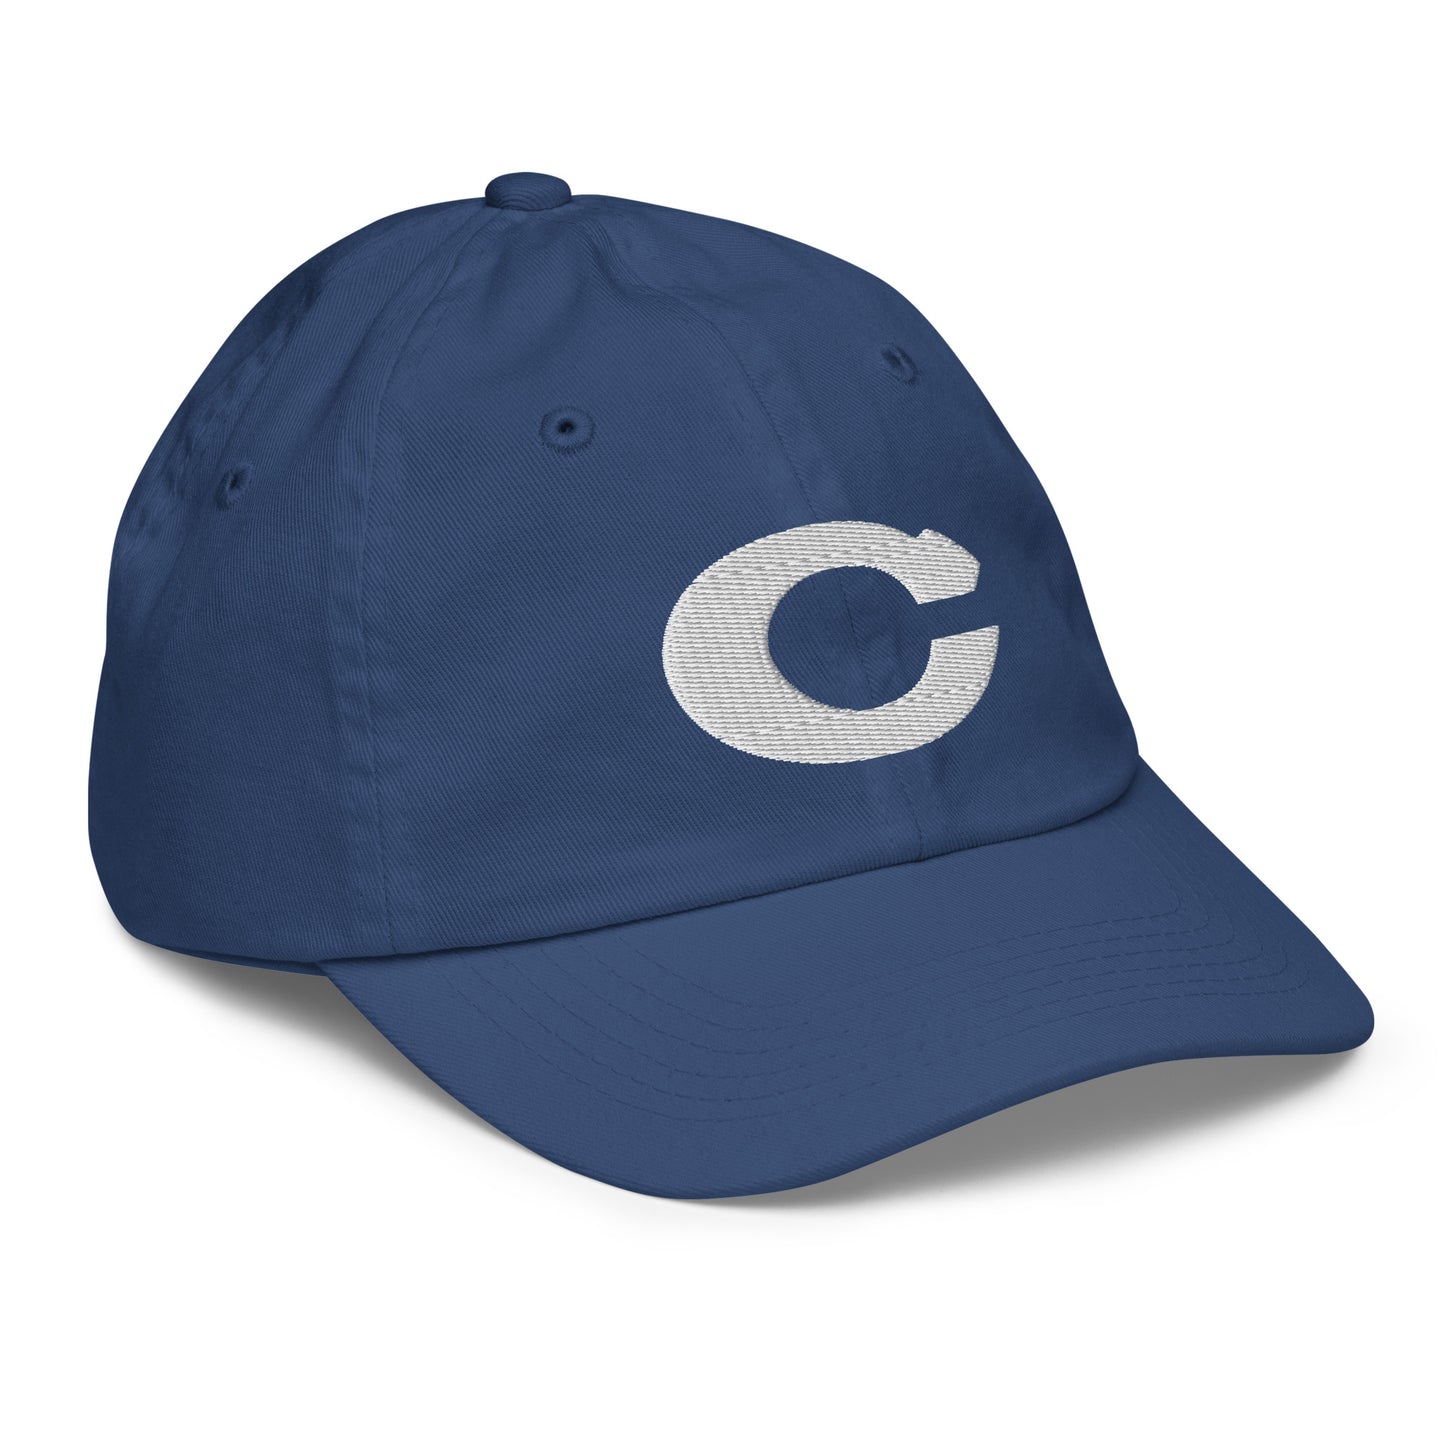 C Youth Hat